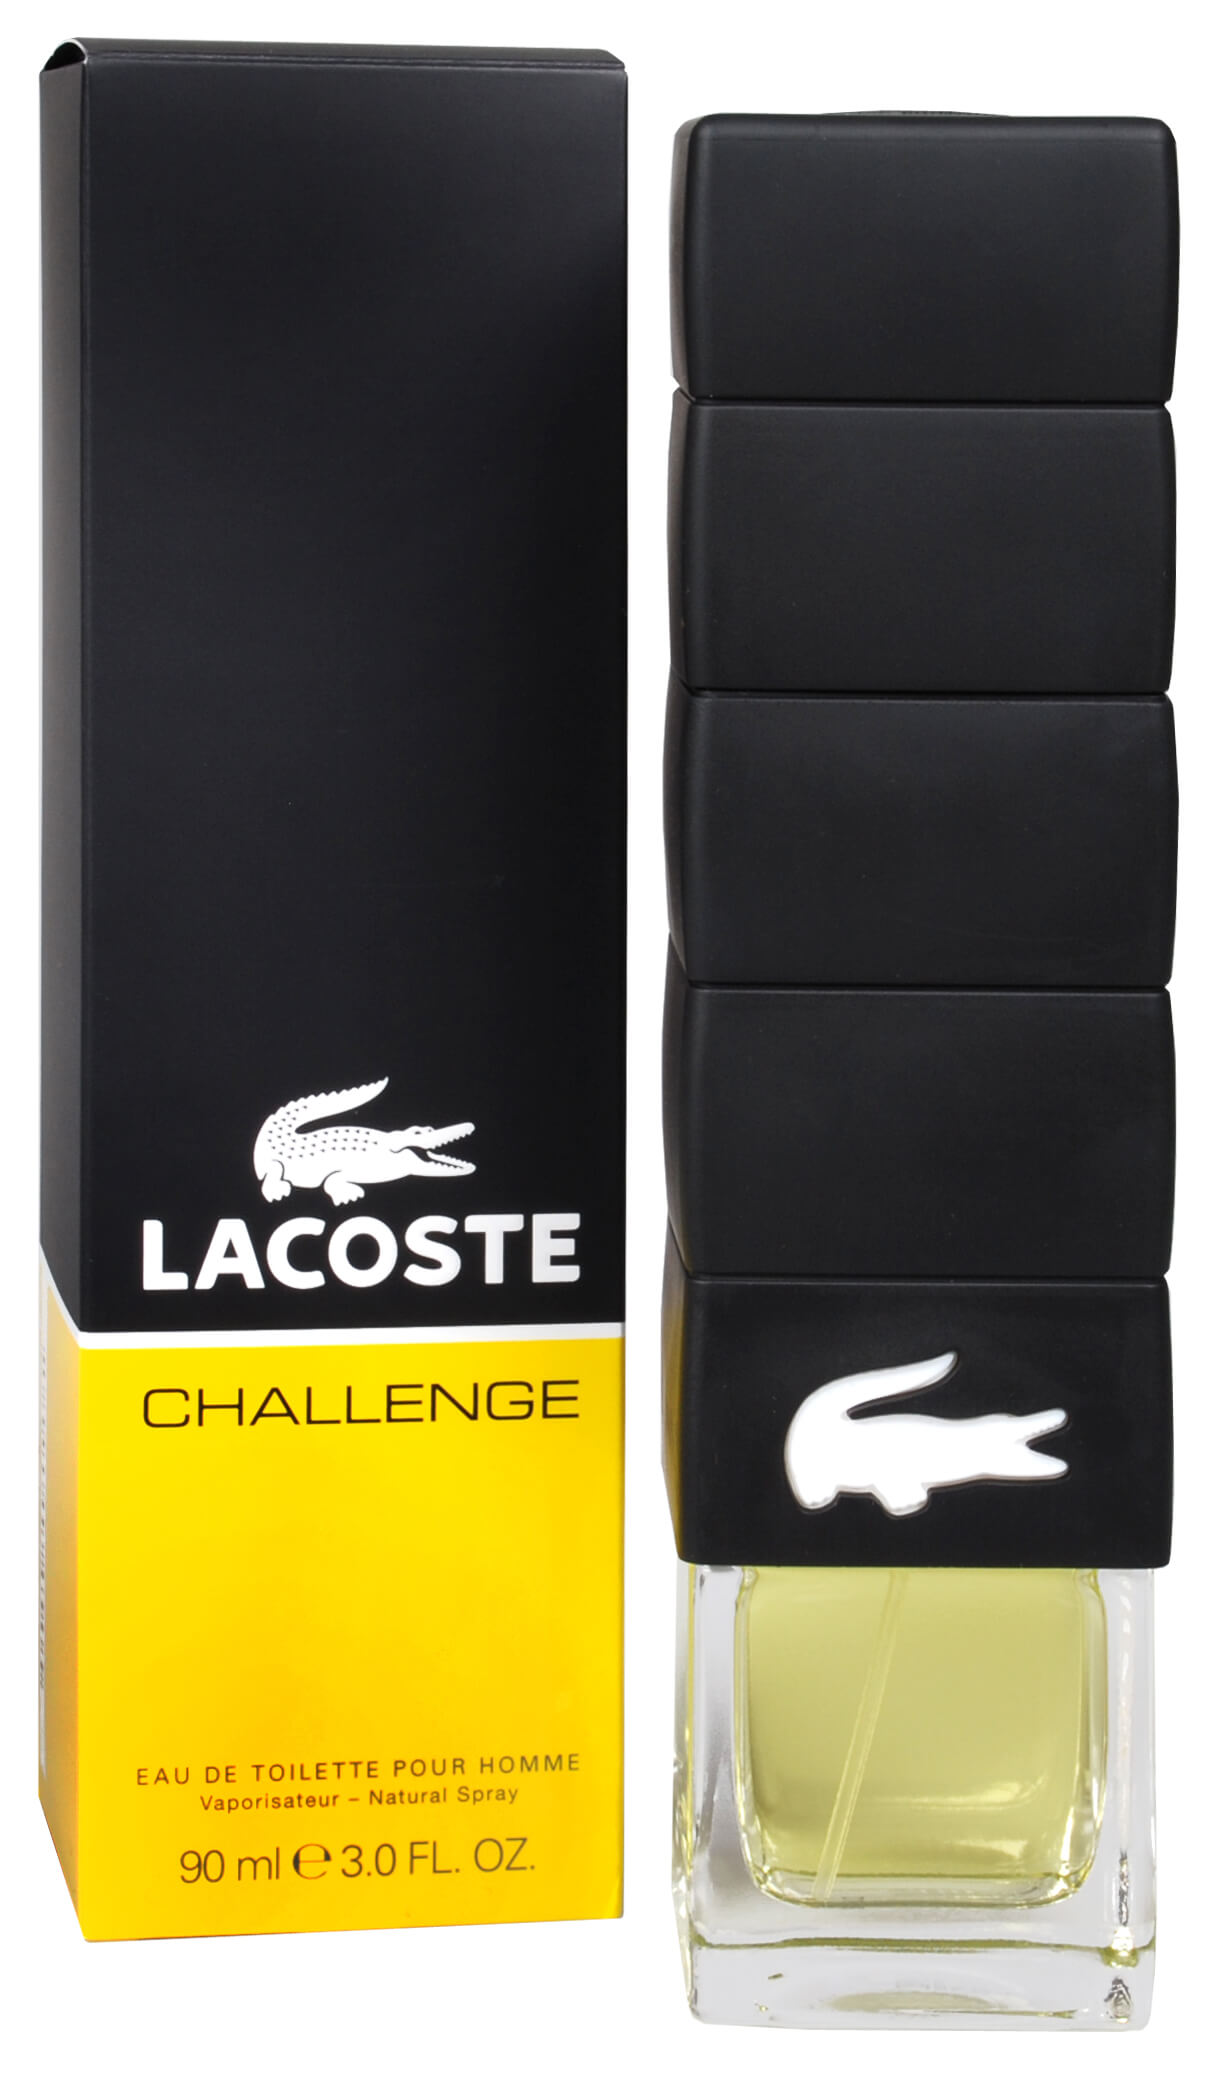 Lacoste Challenge - EDT 90 ml